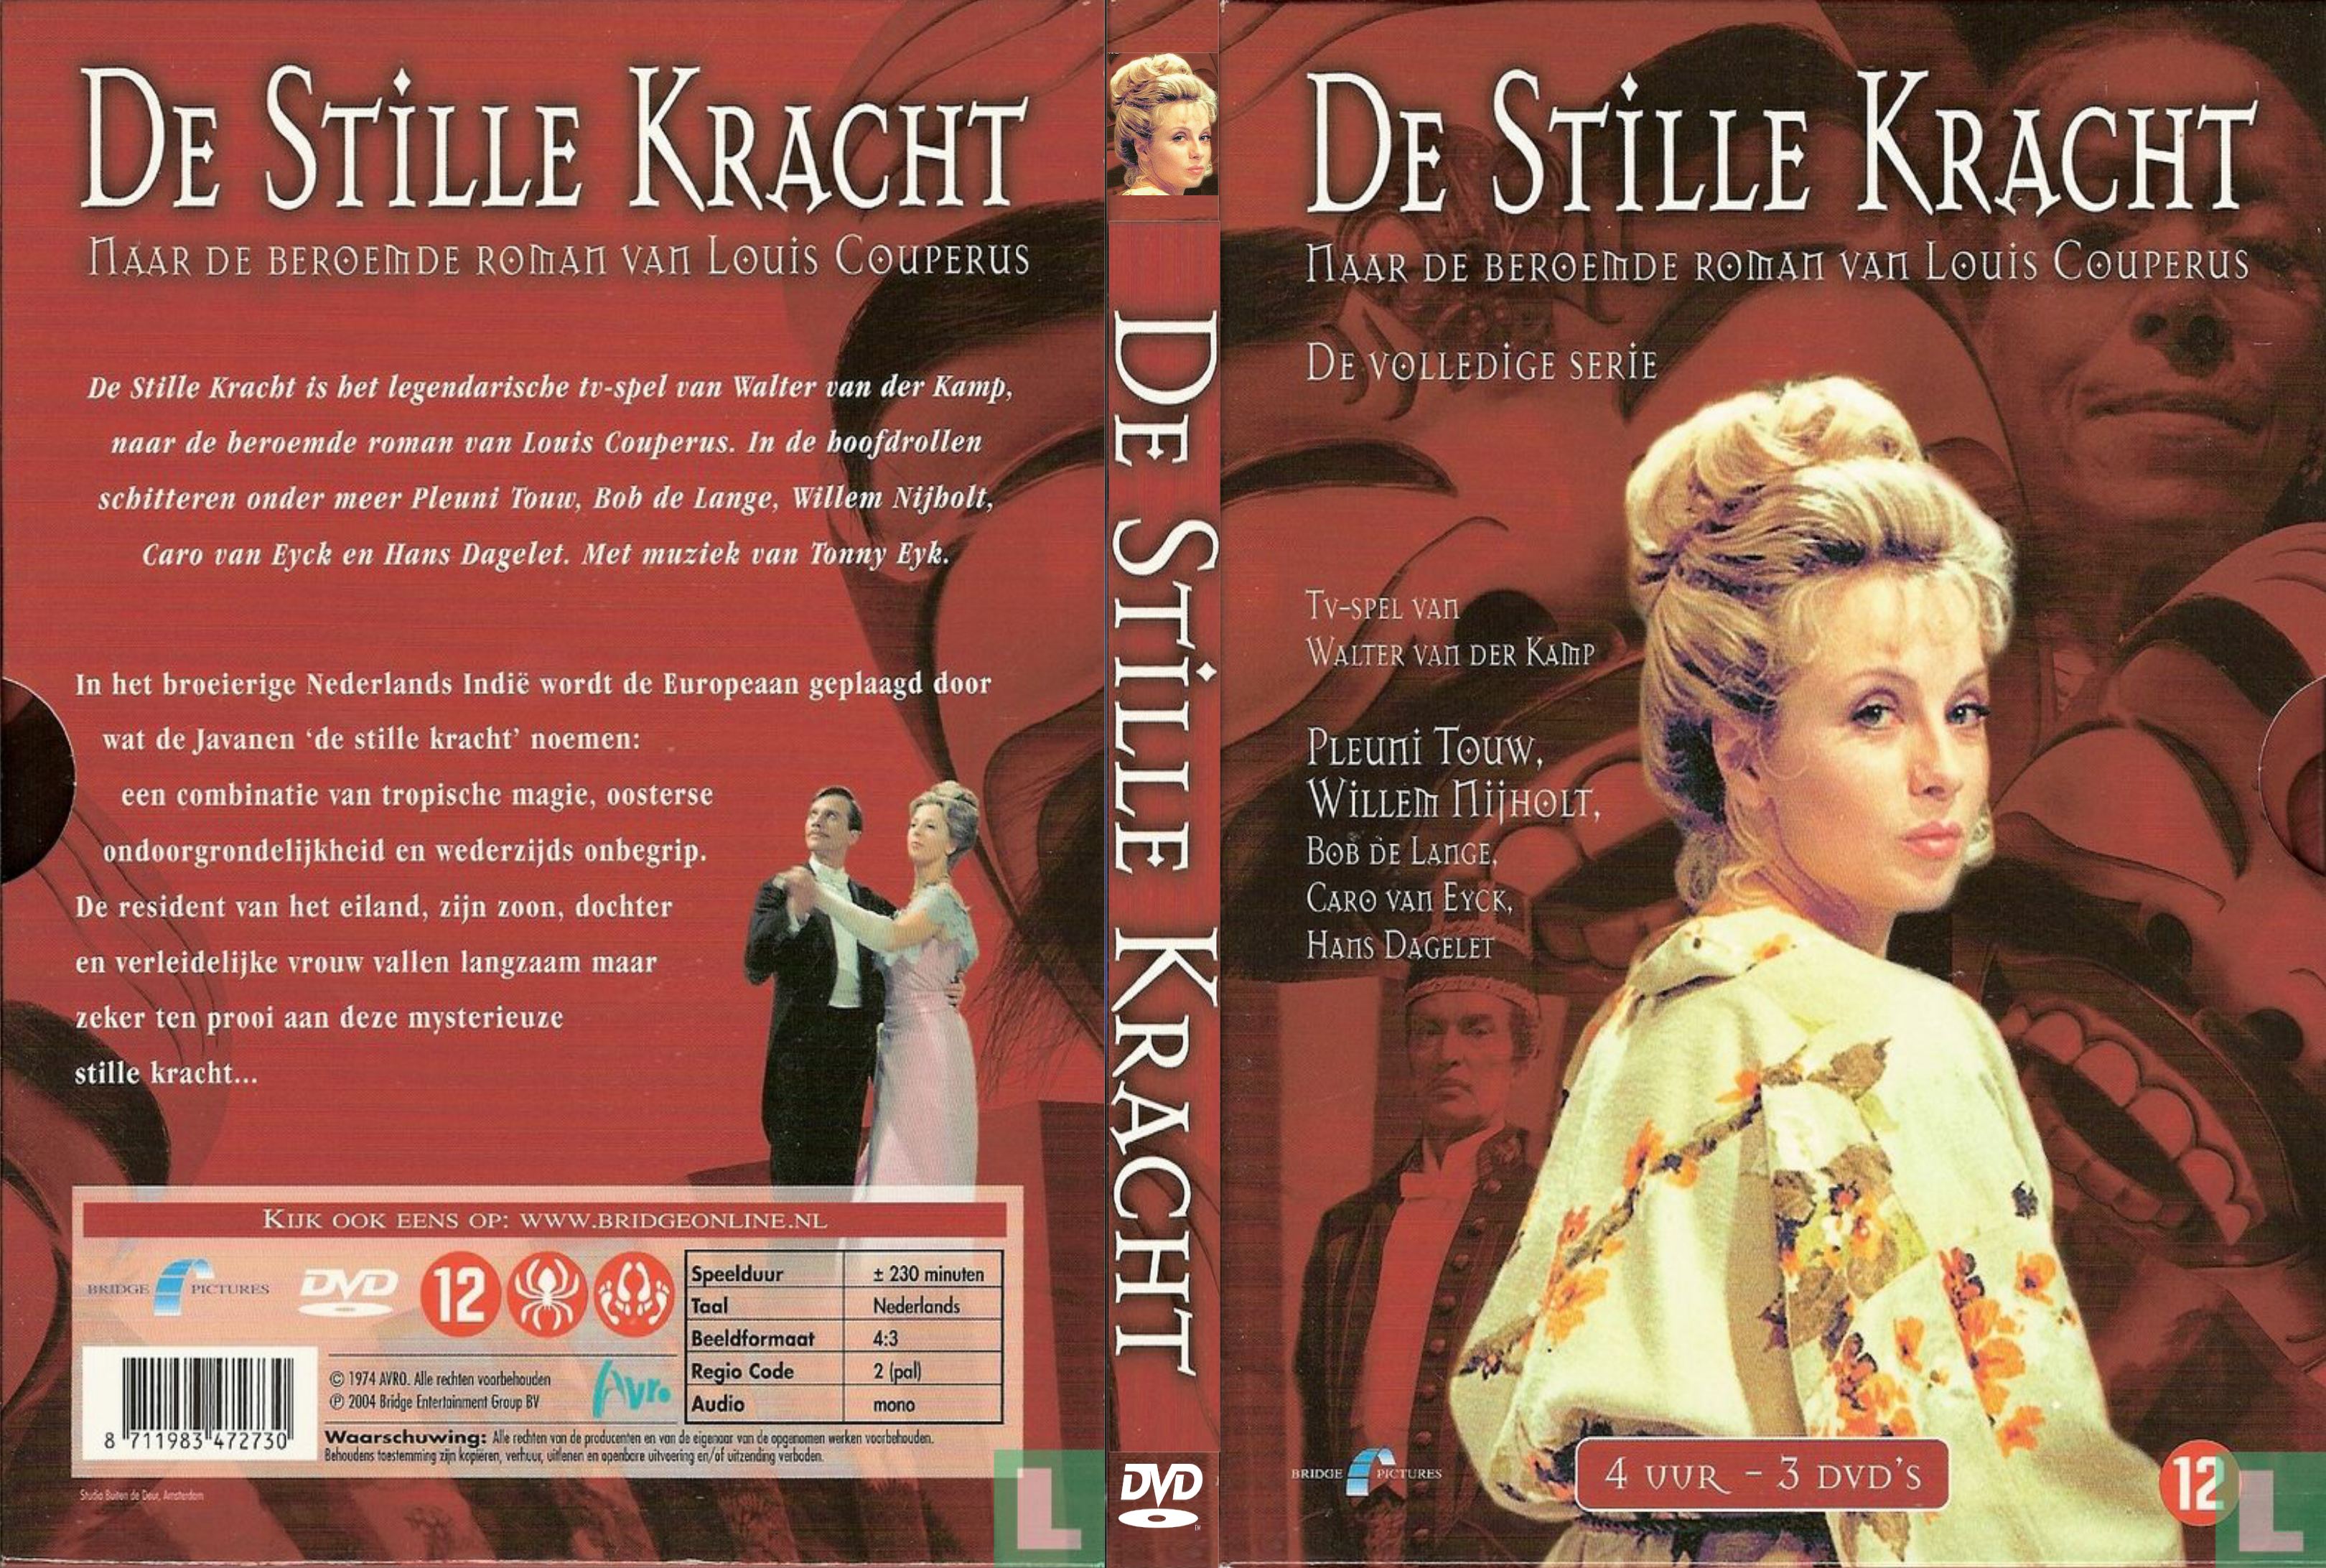 De Stille Kracht (1974) - DvD 3 Finale